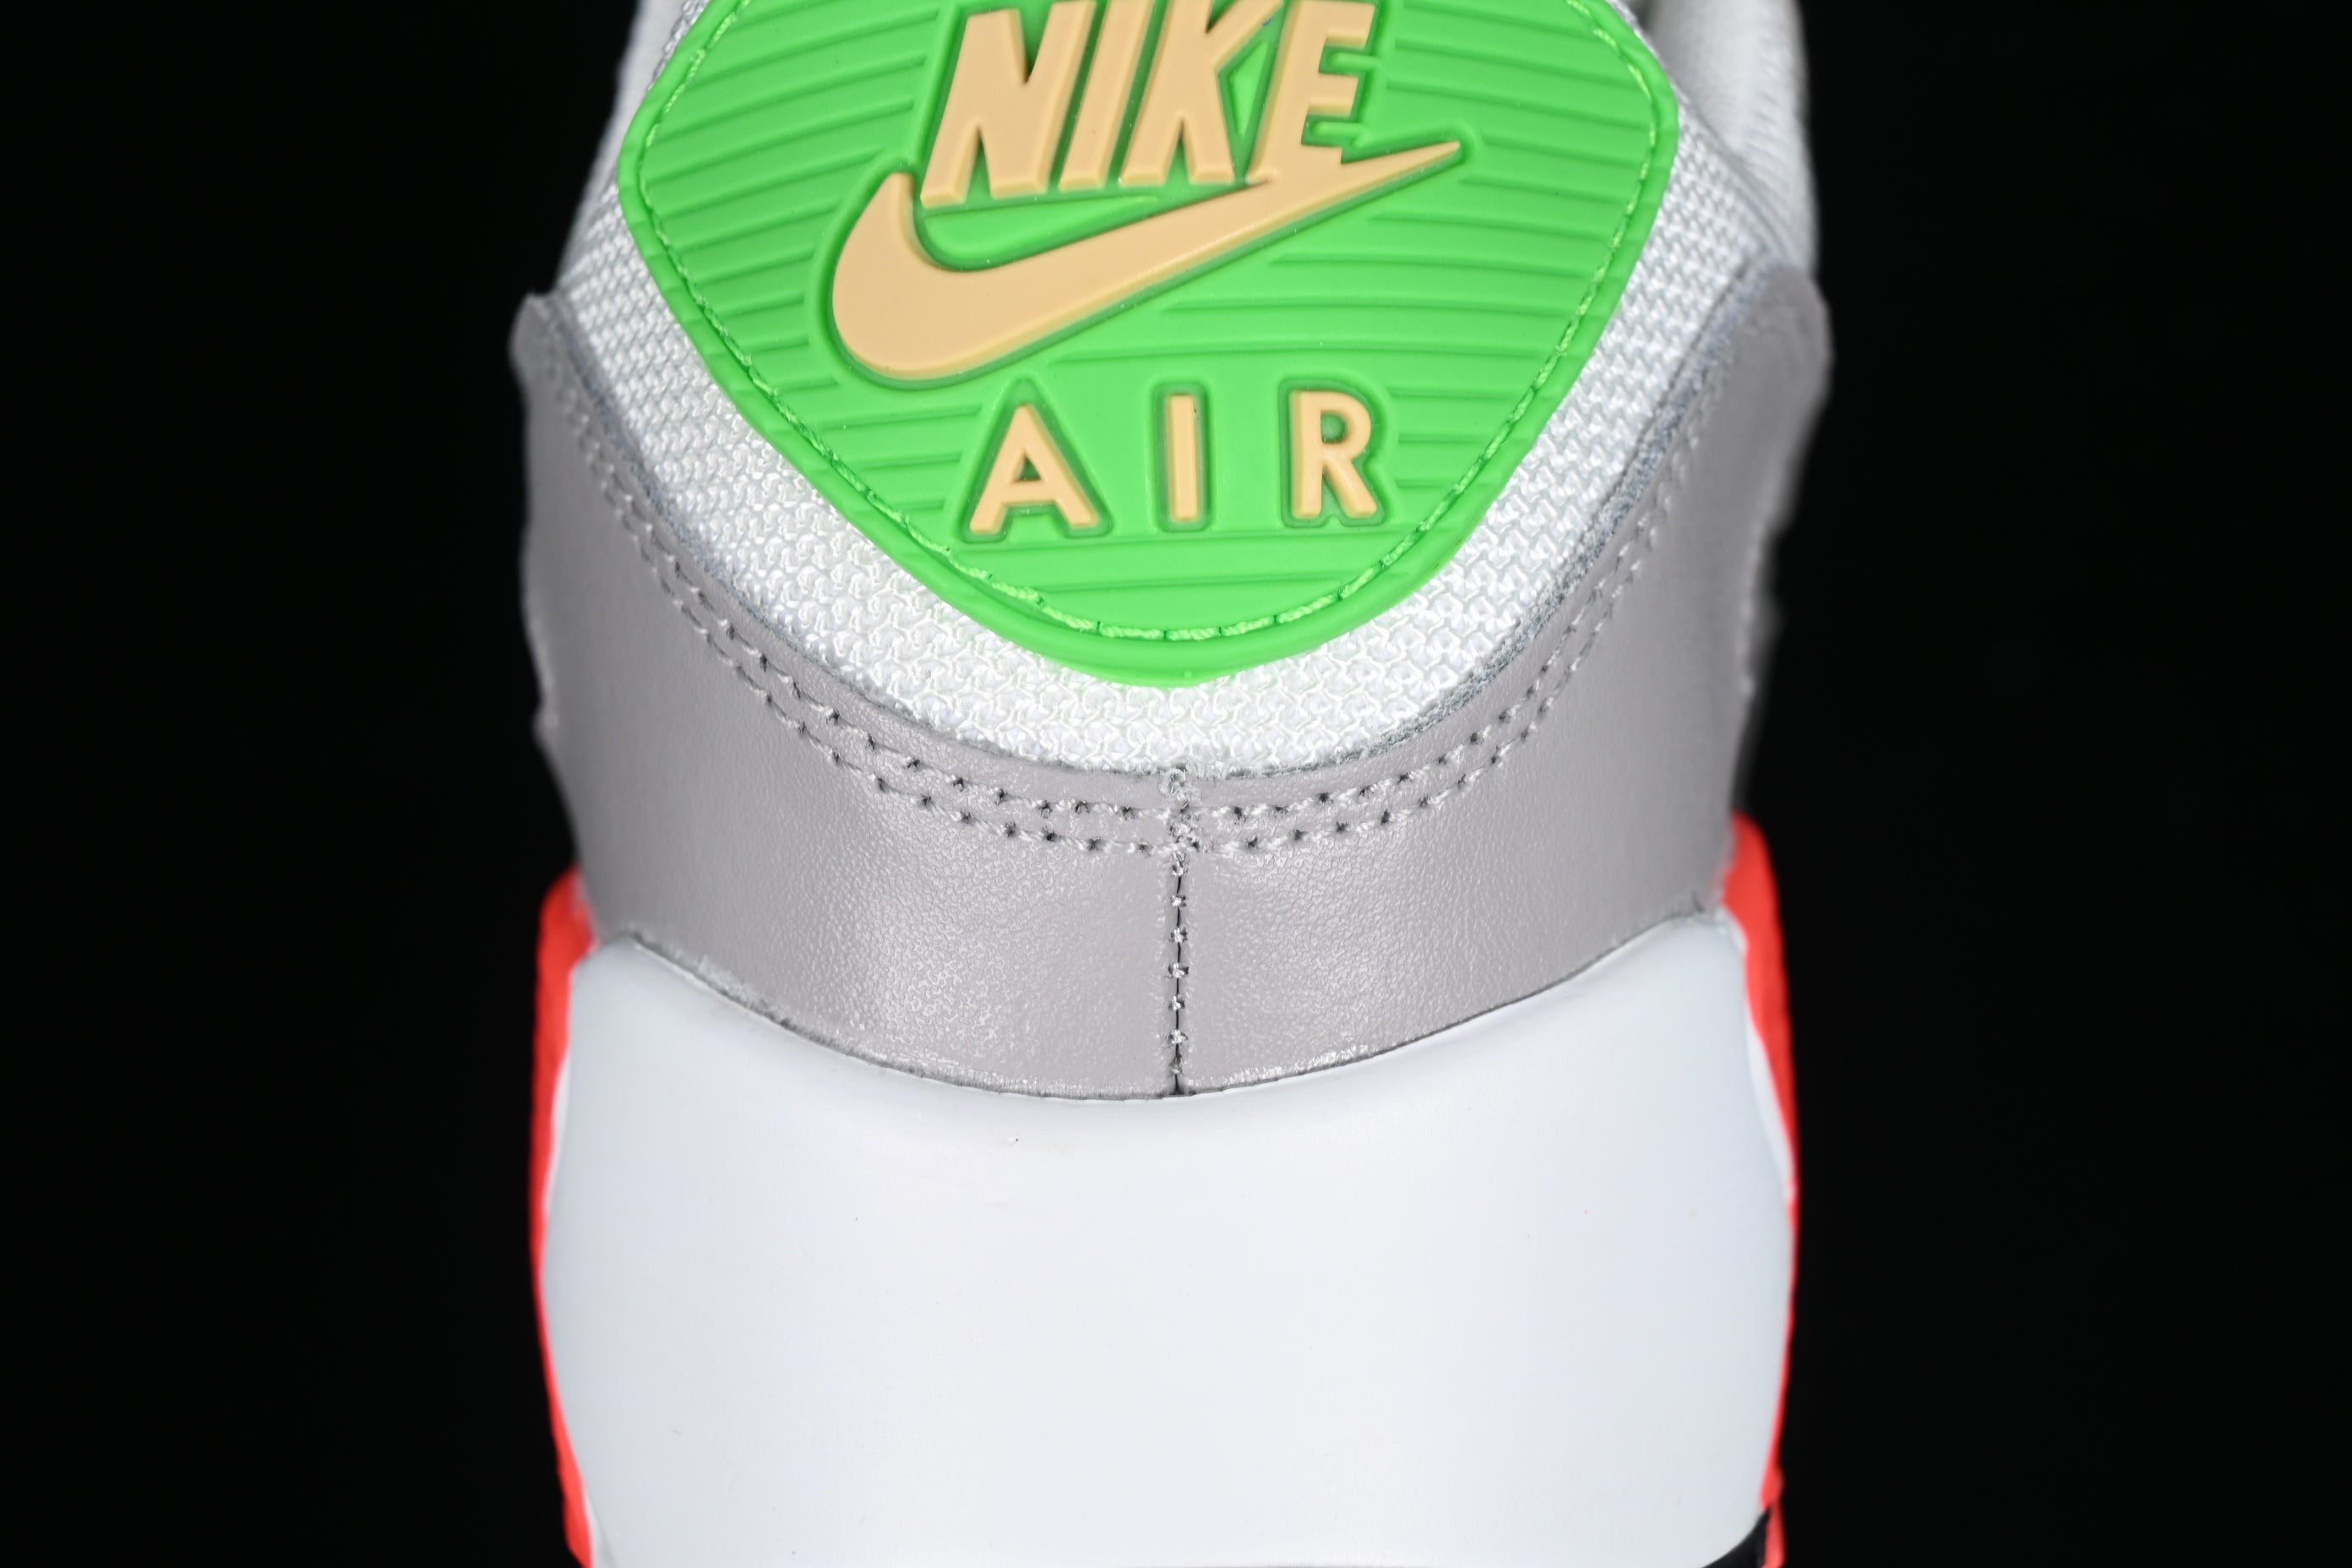 NikeMens Air Max 90 AM90 - Evolution Of Icon